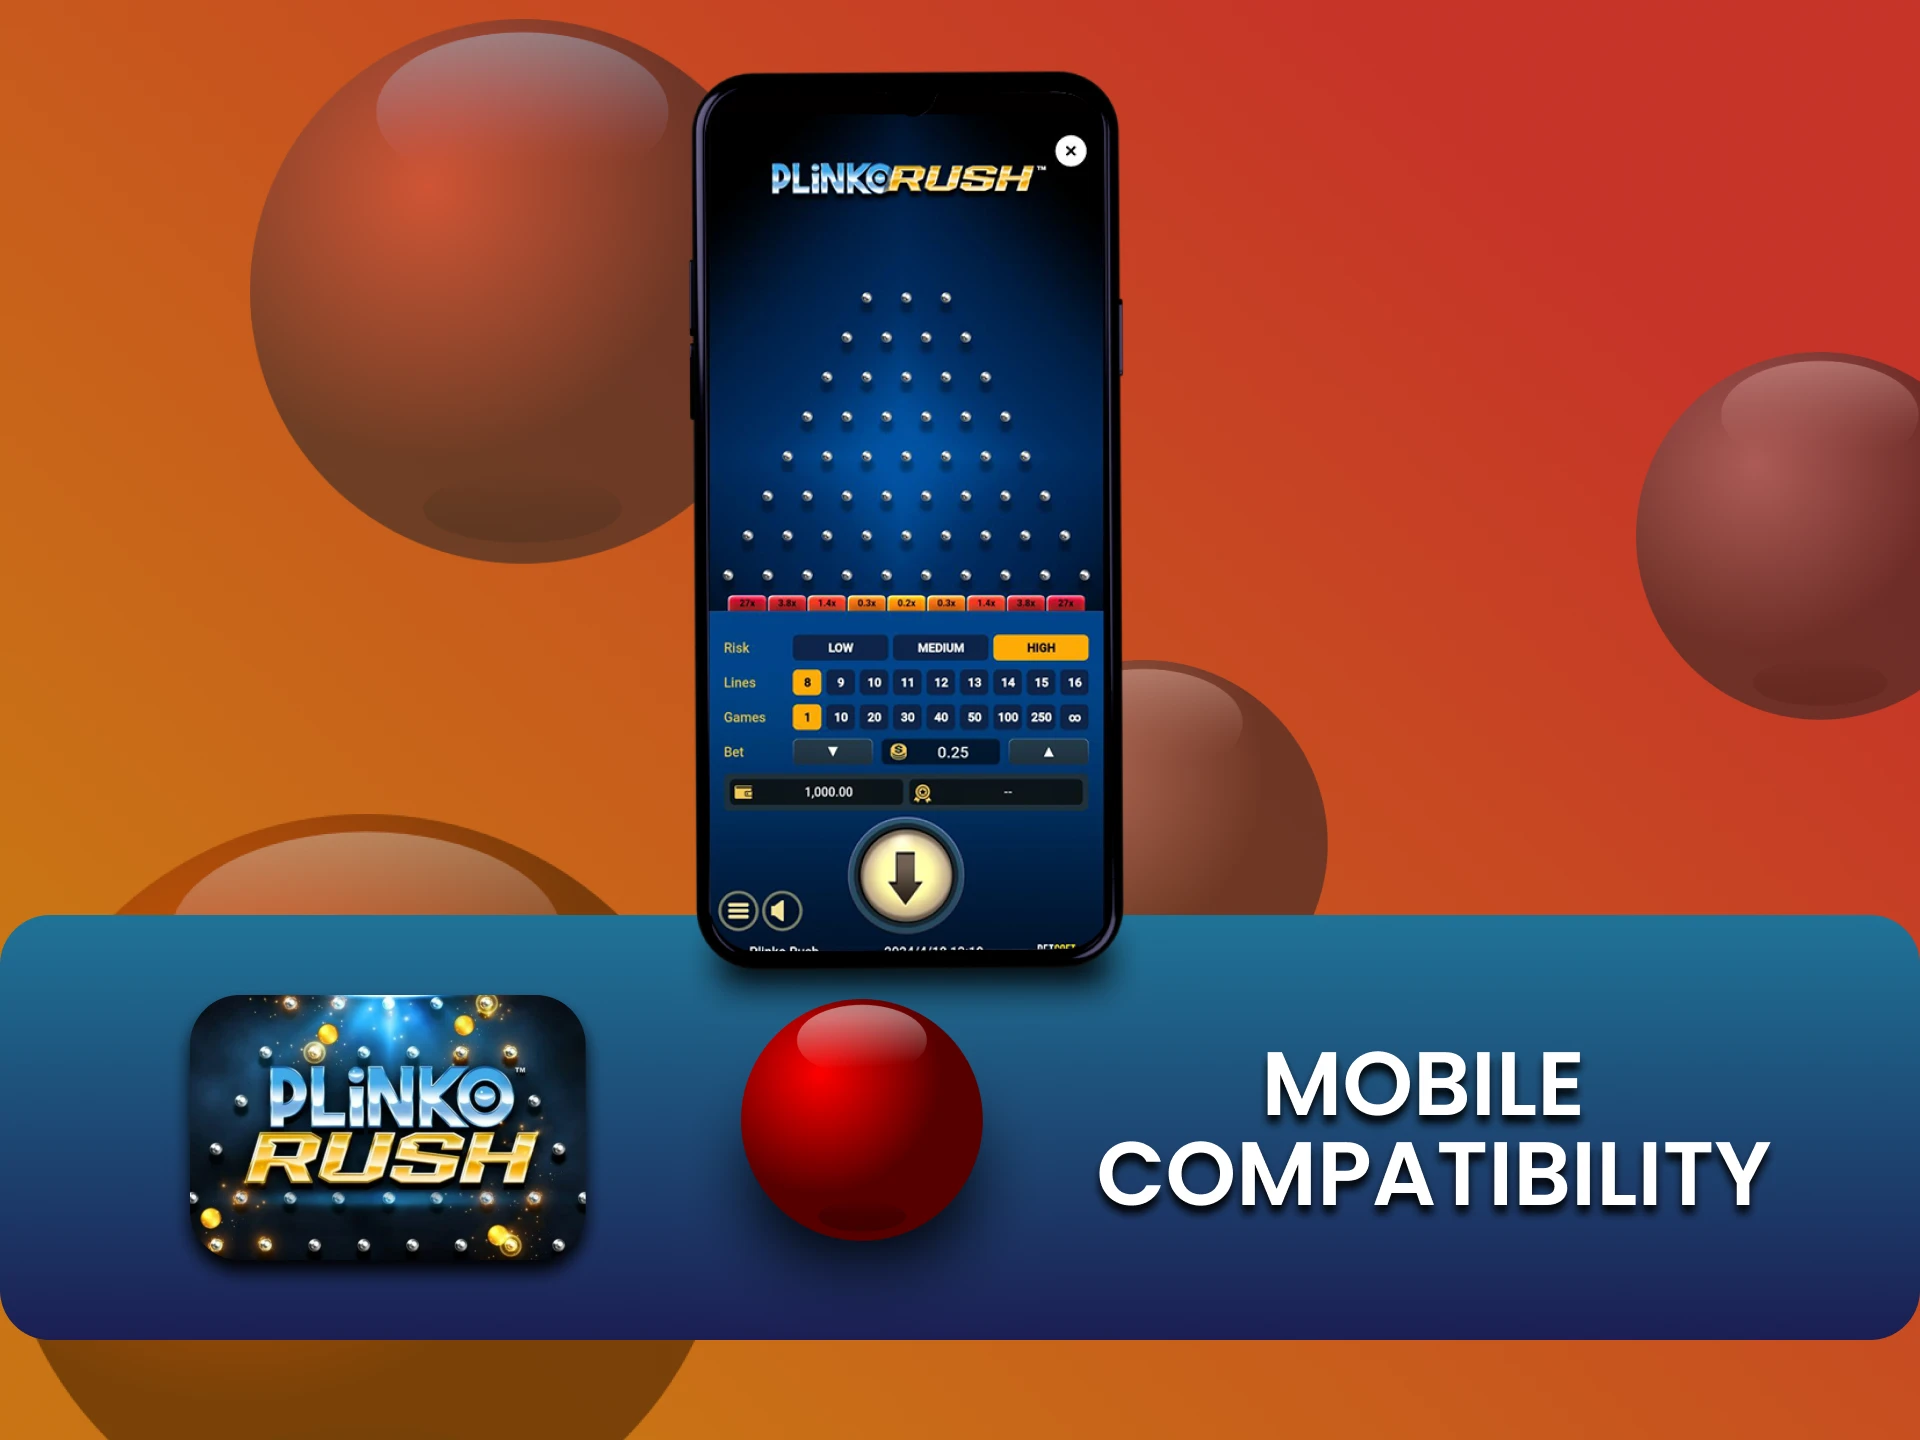 You can play Plinko Rush through an app on your phone.